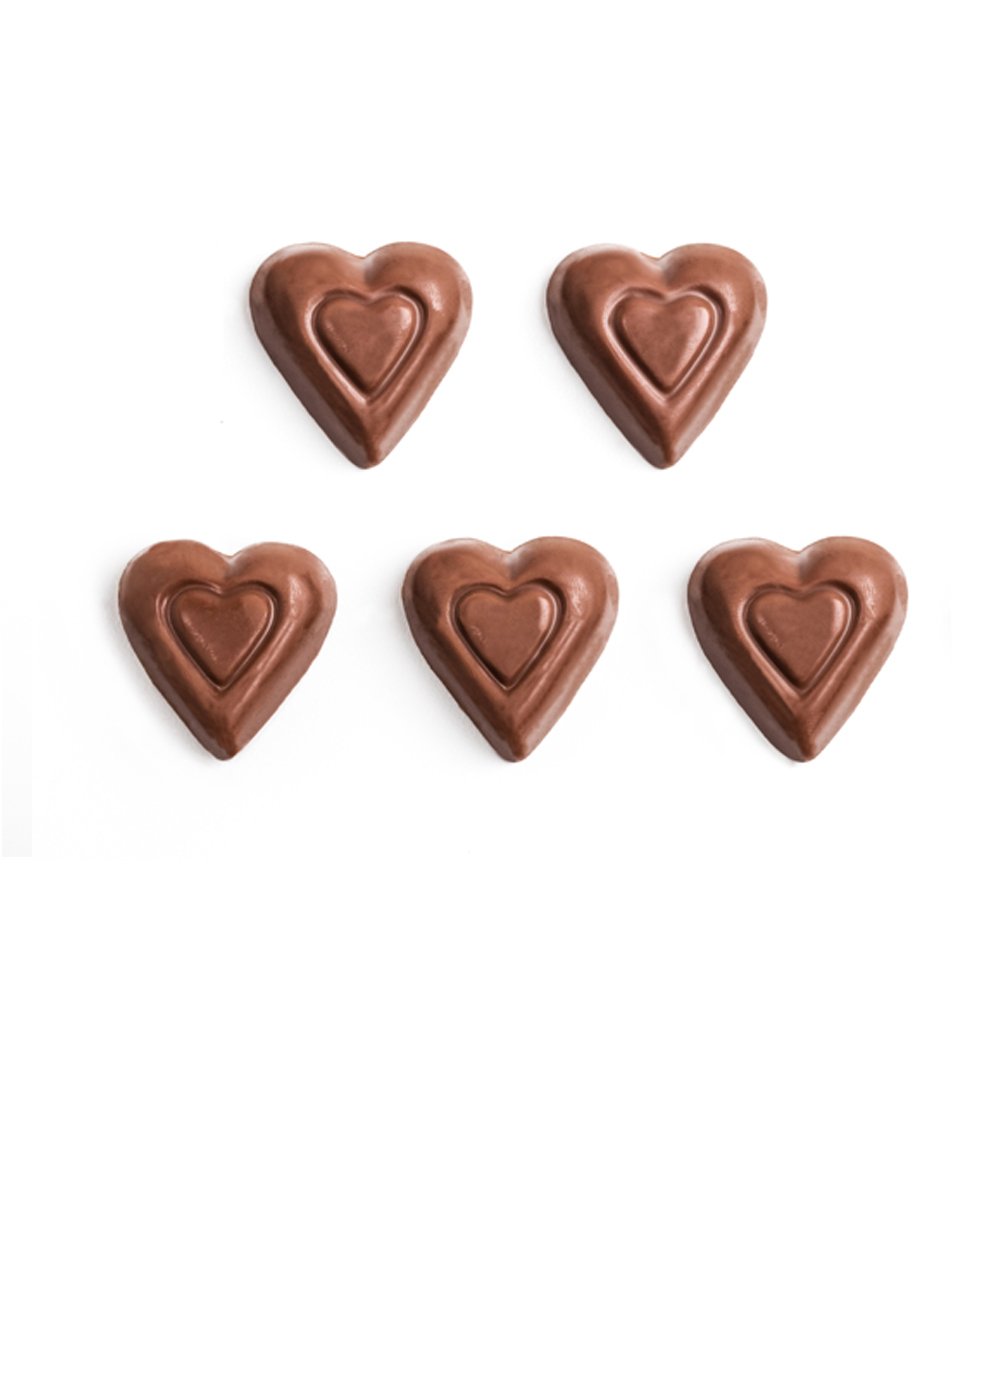 Wholesale Madelaine Chocolate Miniature Gold Hearts - 10 Lb Bag Bulk